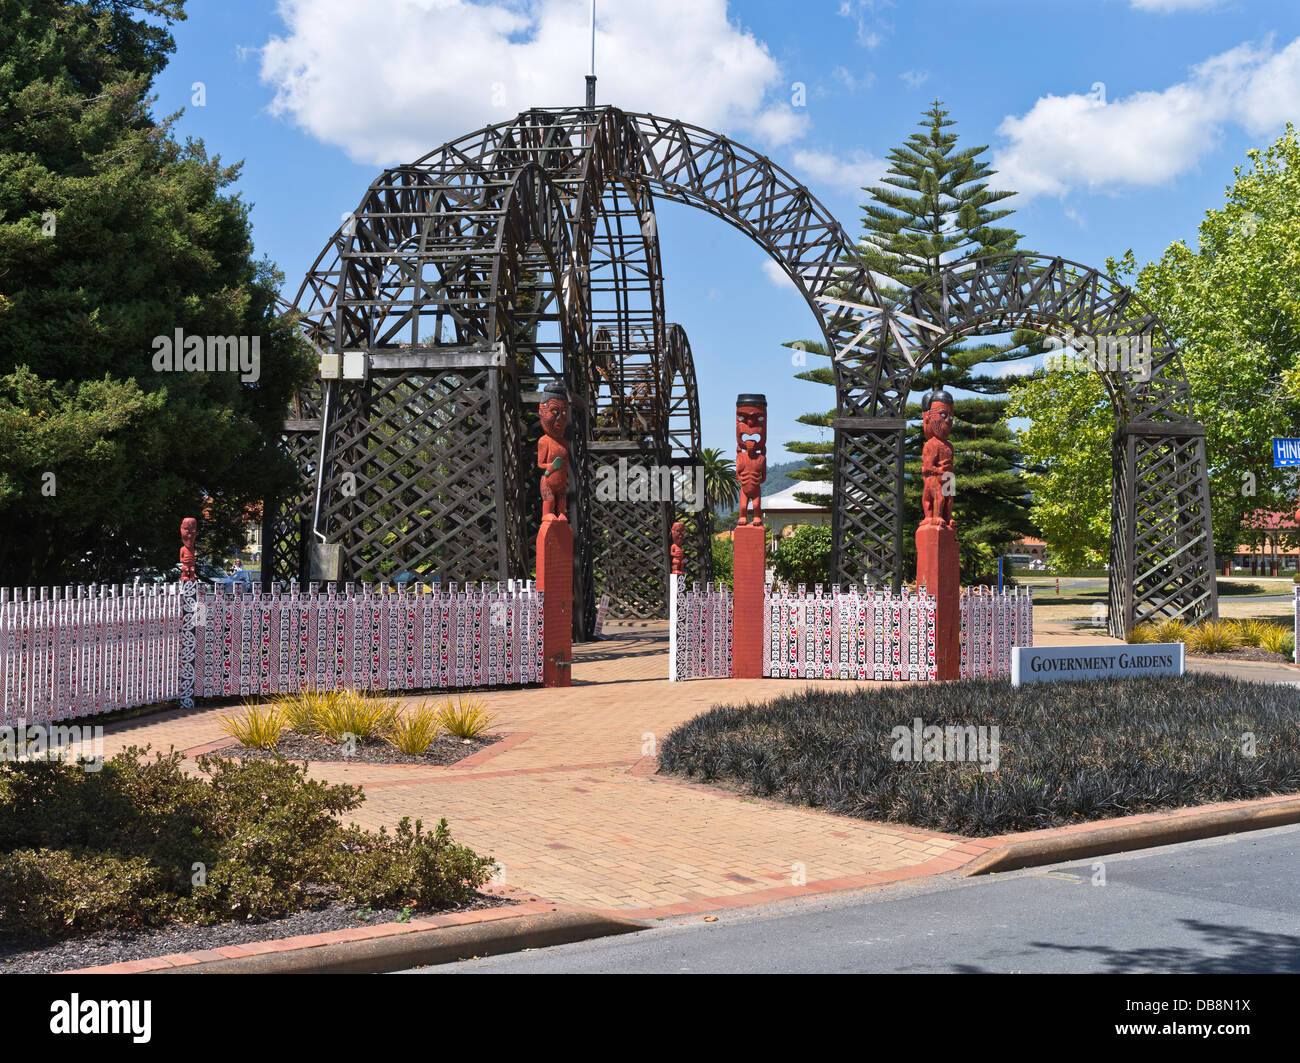 dh Regierung Gärten ROTORUA Neuseeland Eingang zum öffentlichen Park Paepaekumana Stockfoto